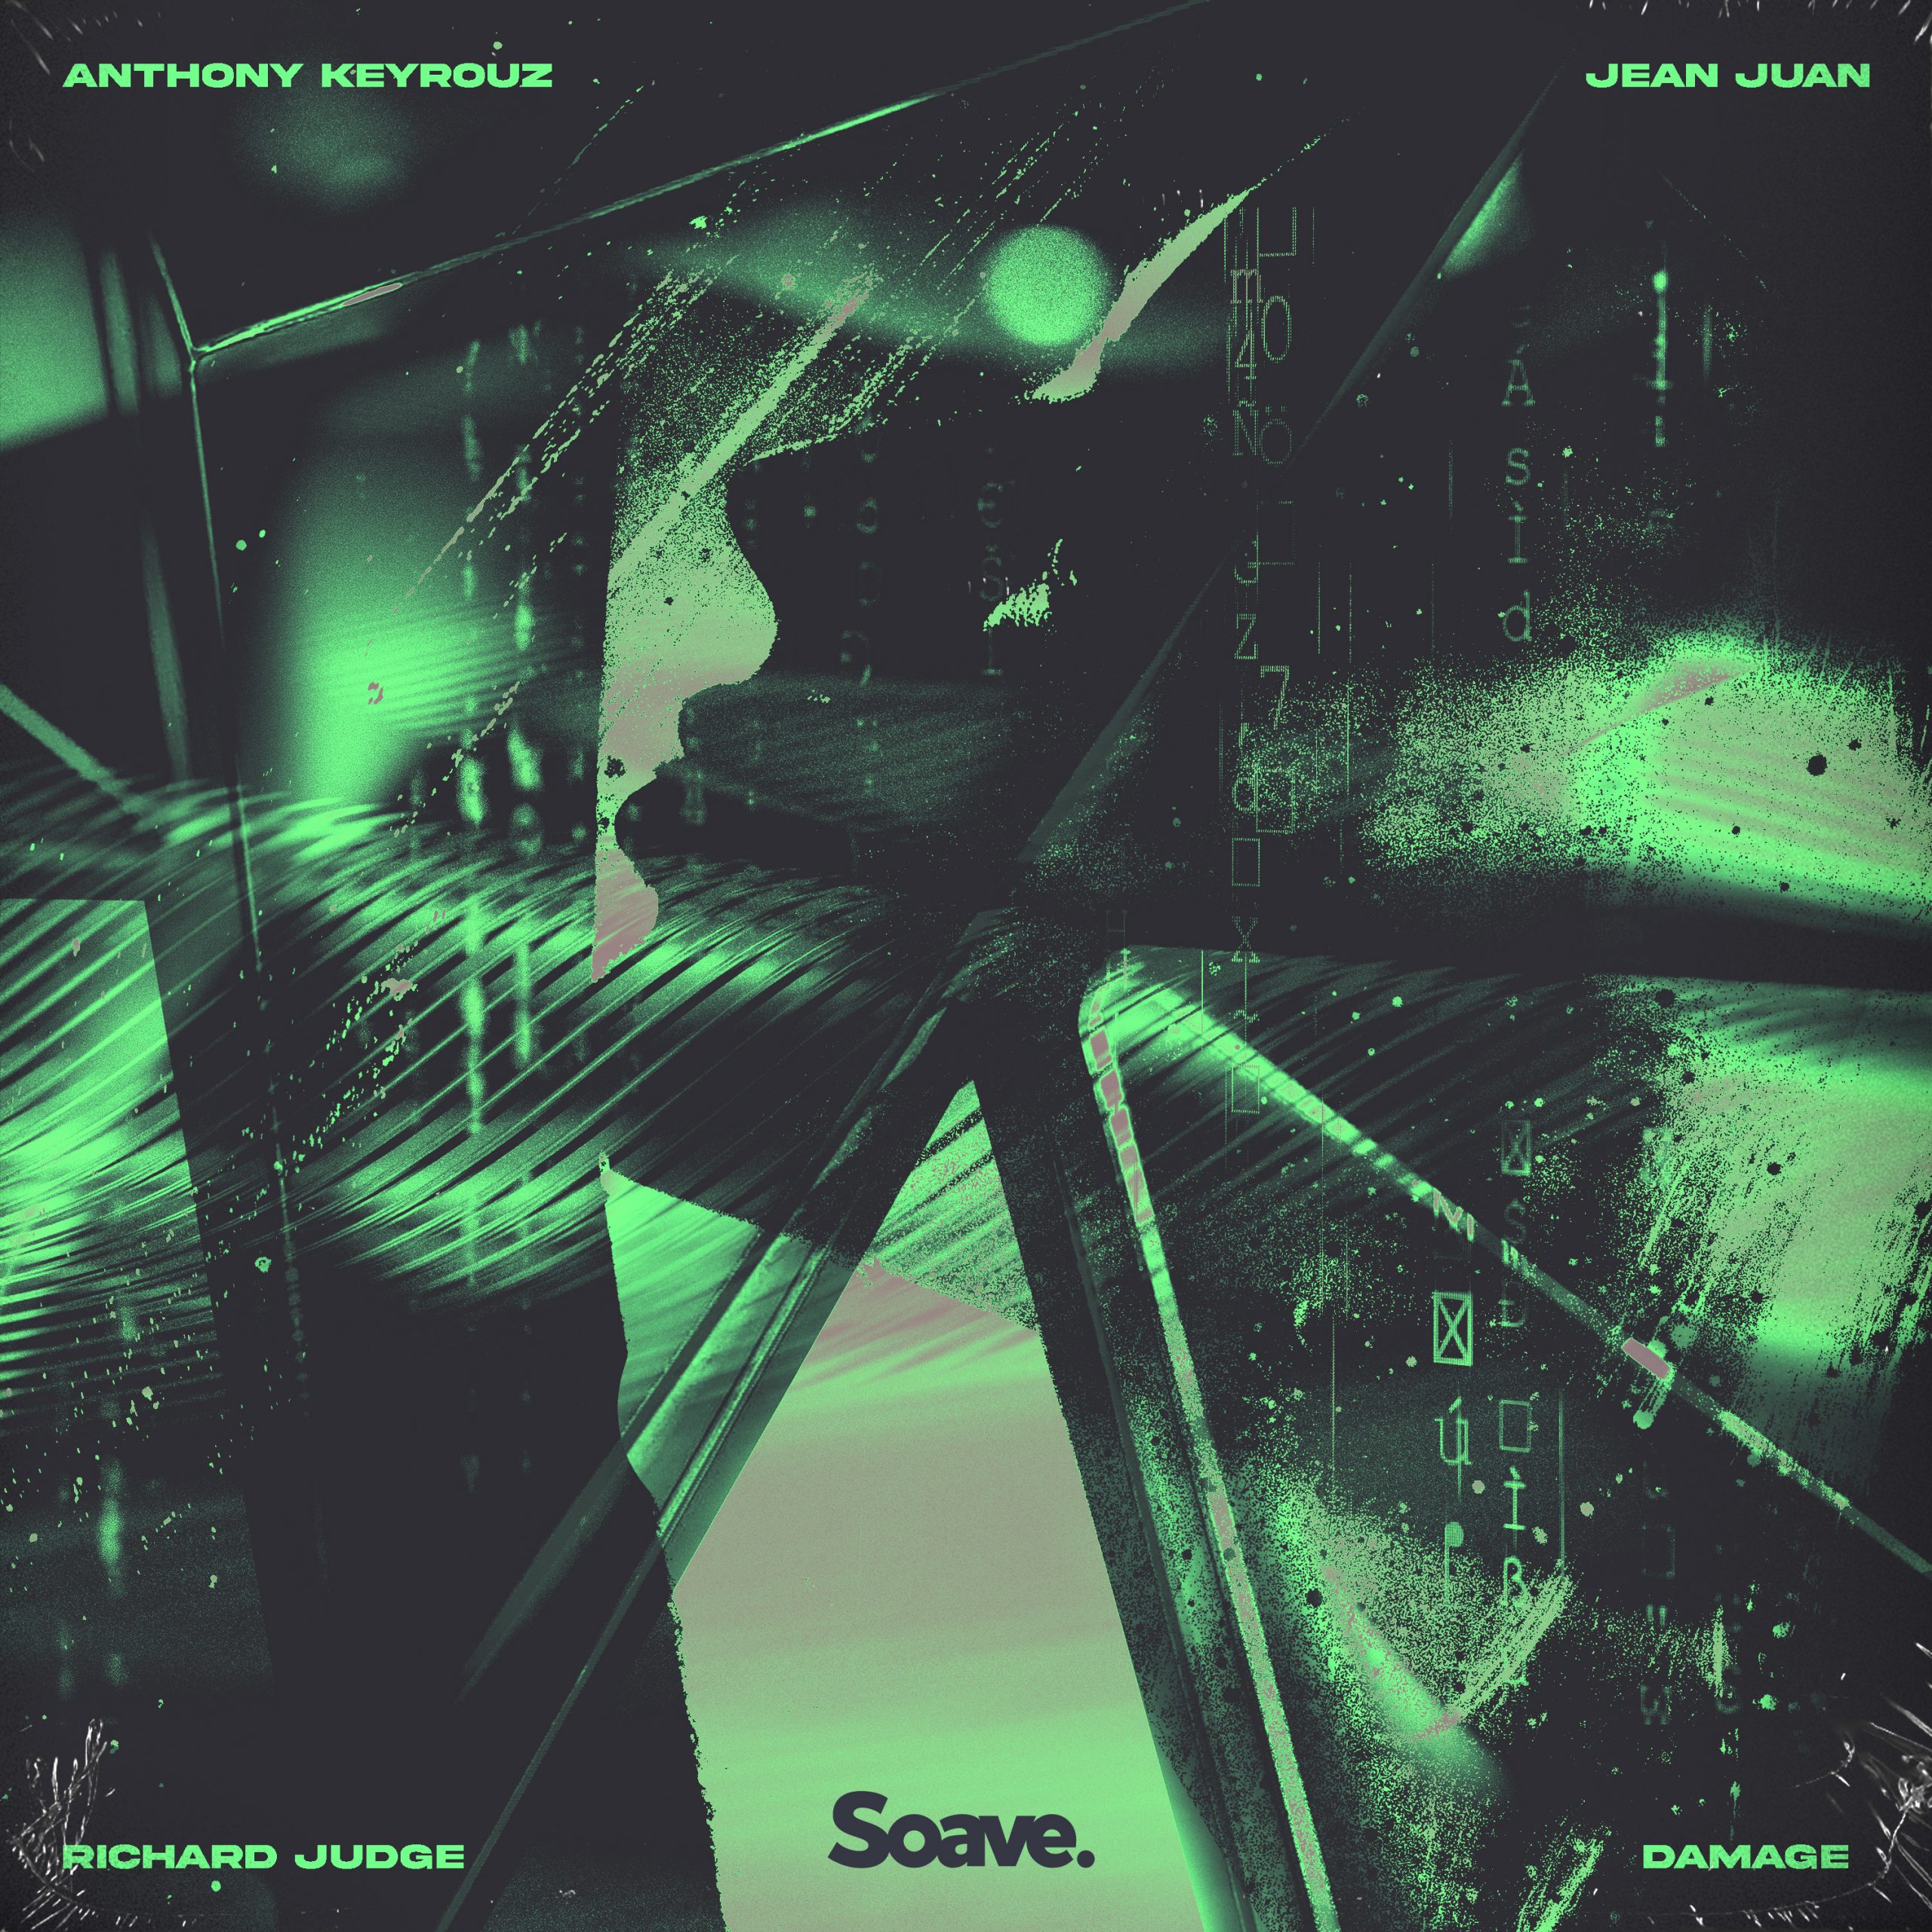 Anthony Keyrouz & Jean Juan – Damage (ft. Richard Judge)